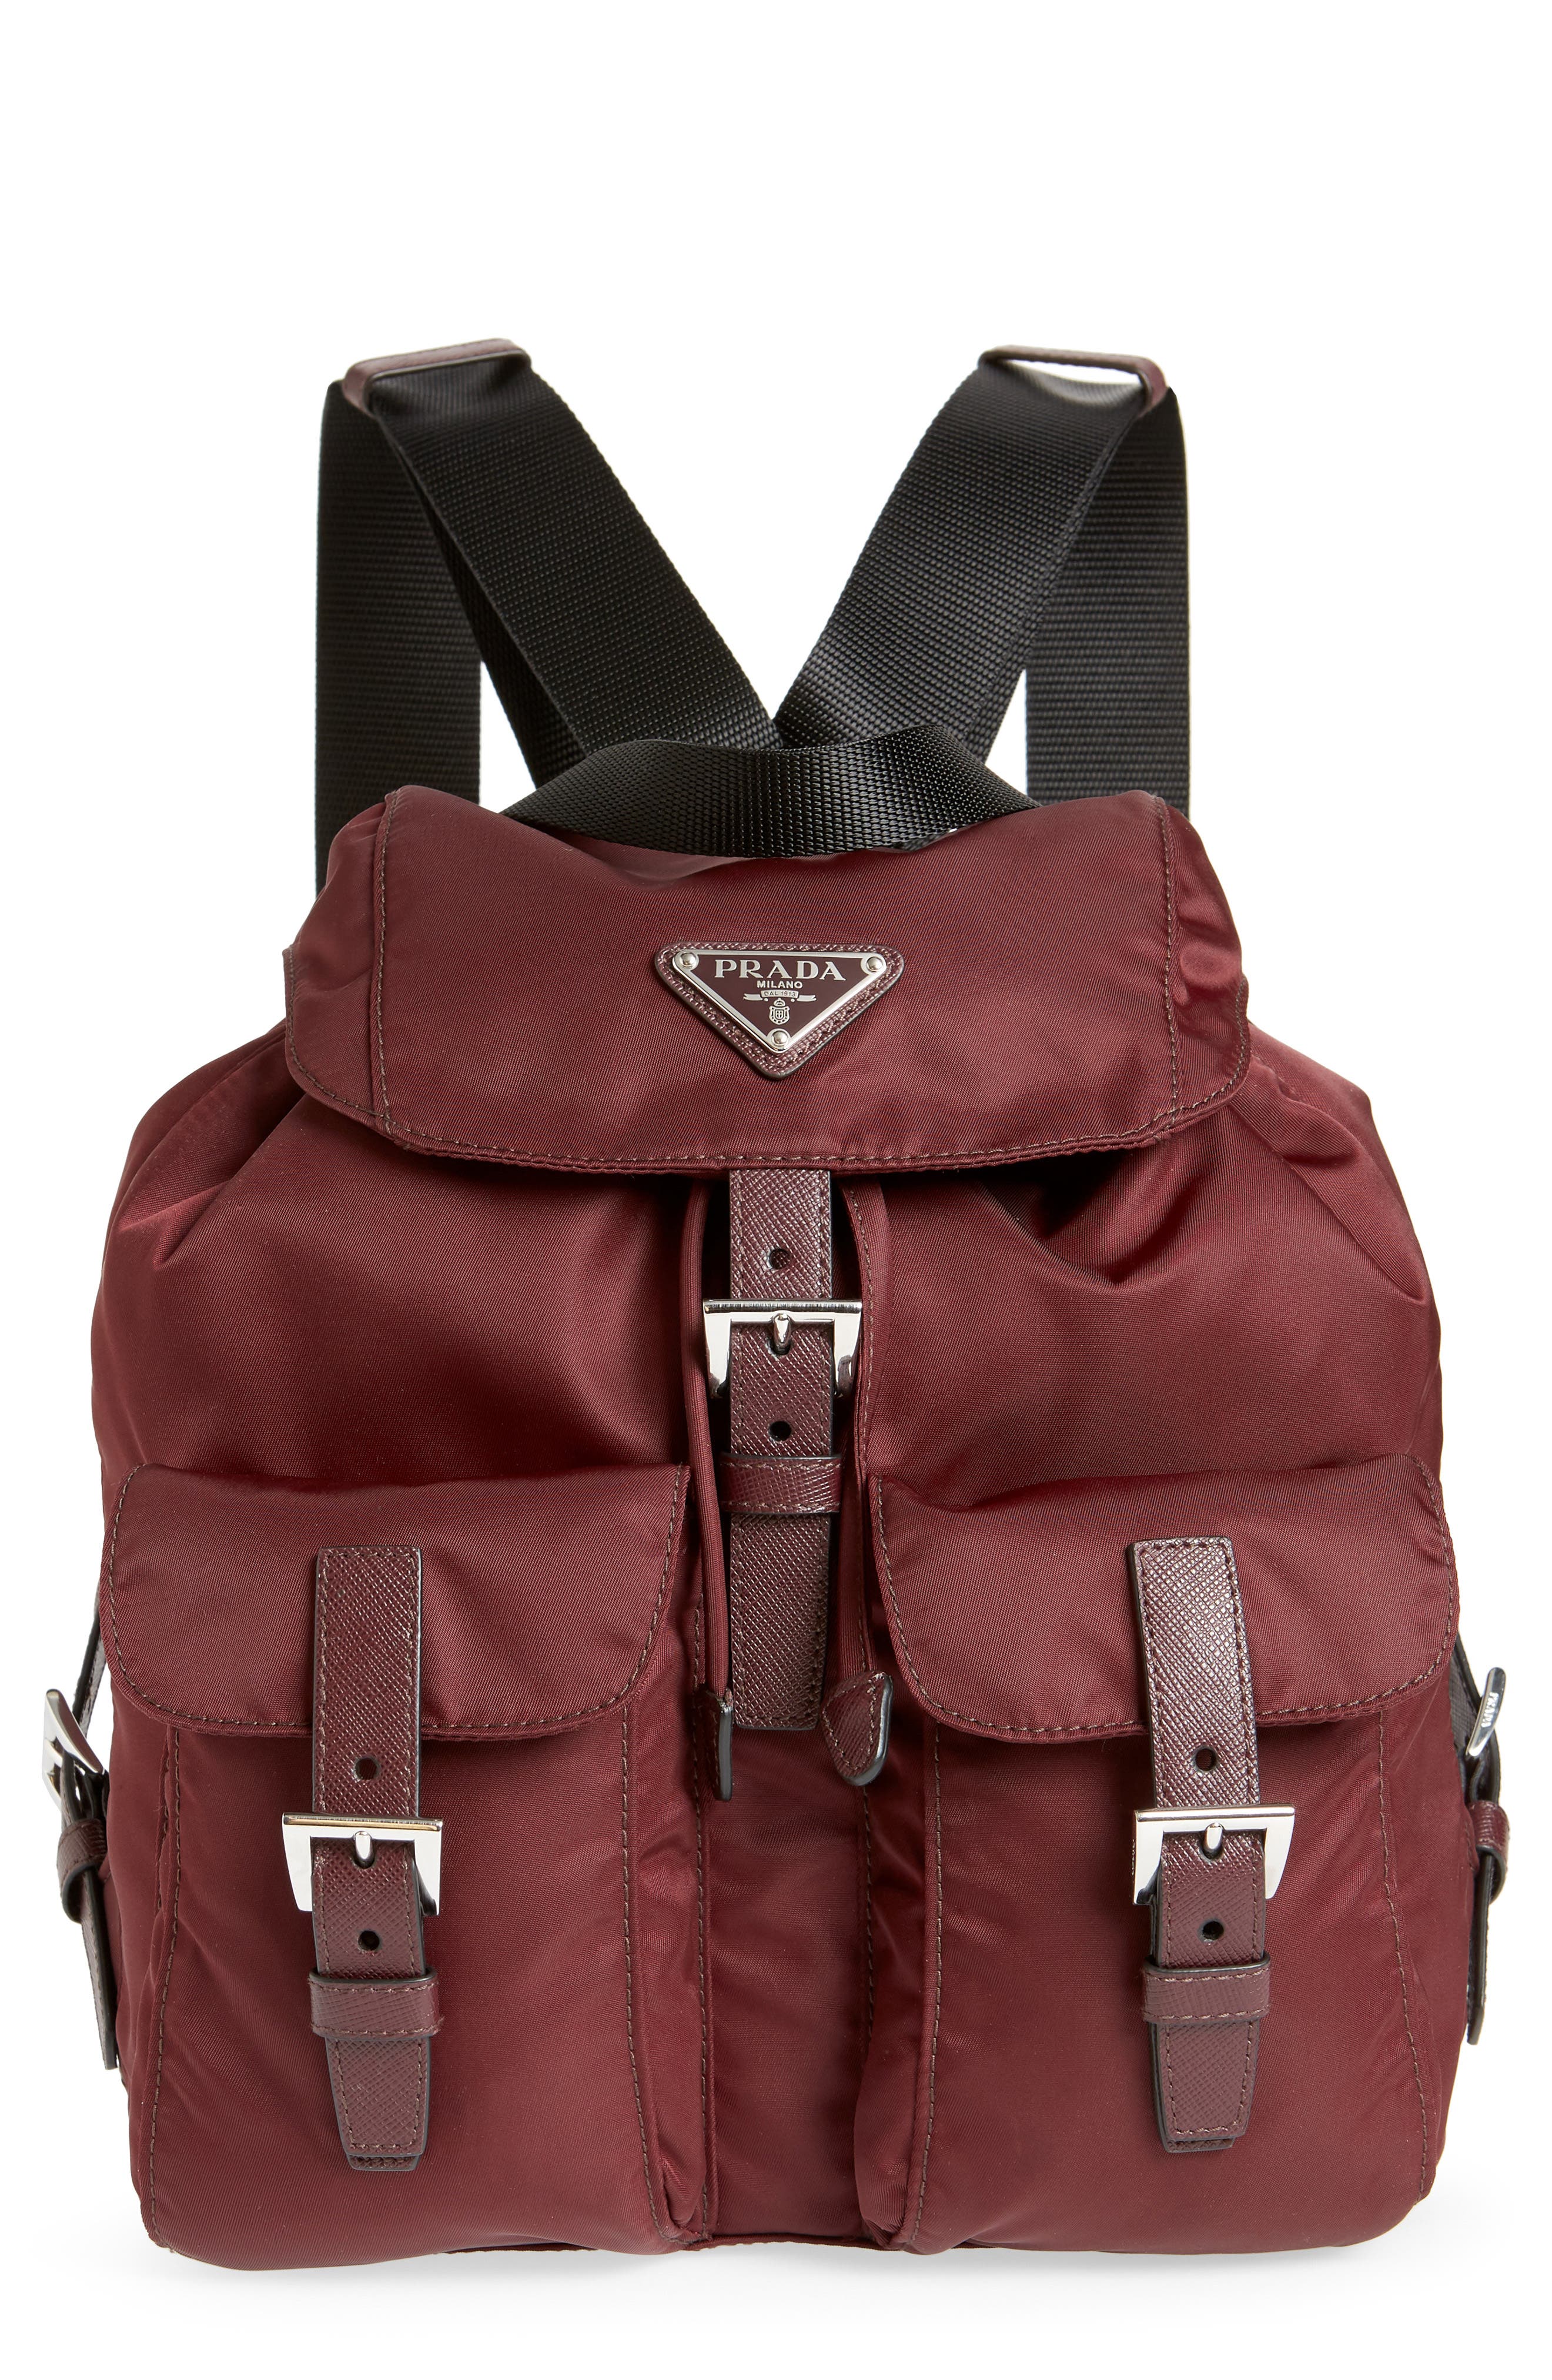 nordstrom prada backpack